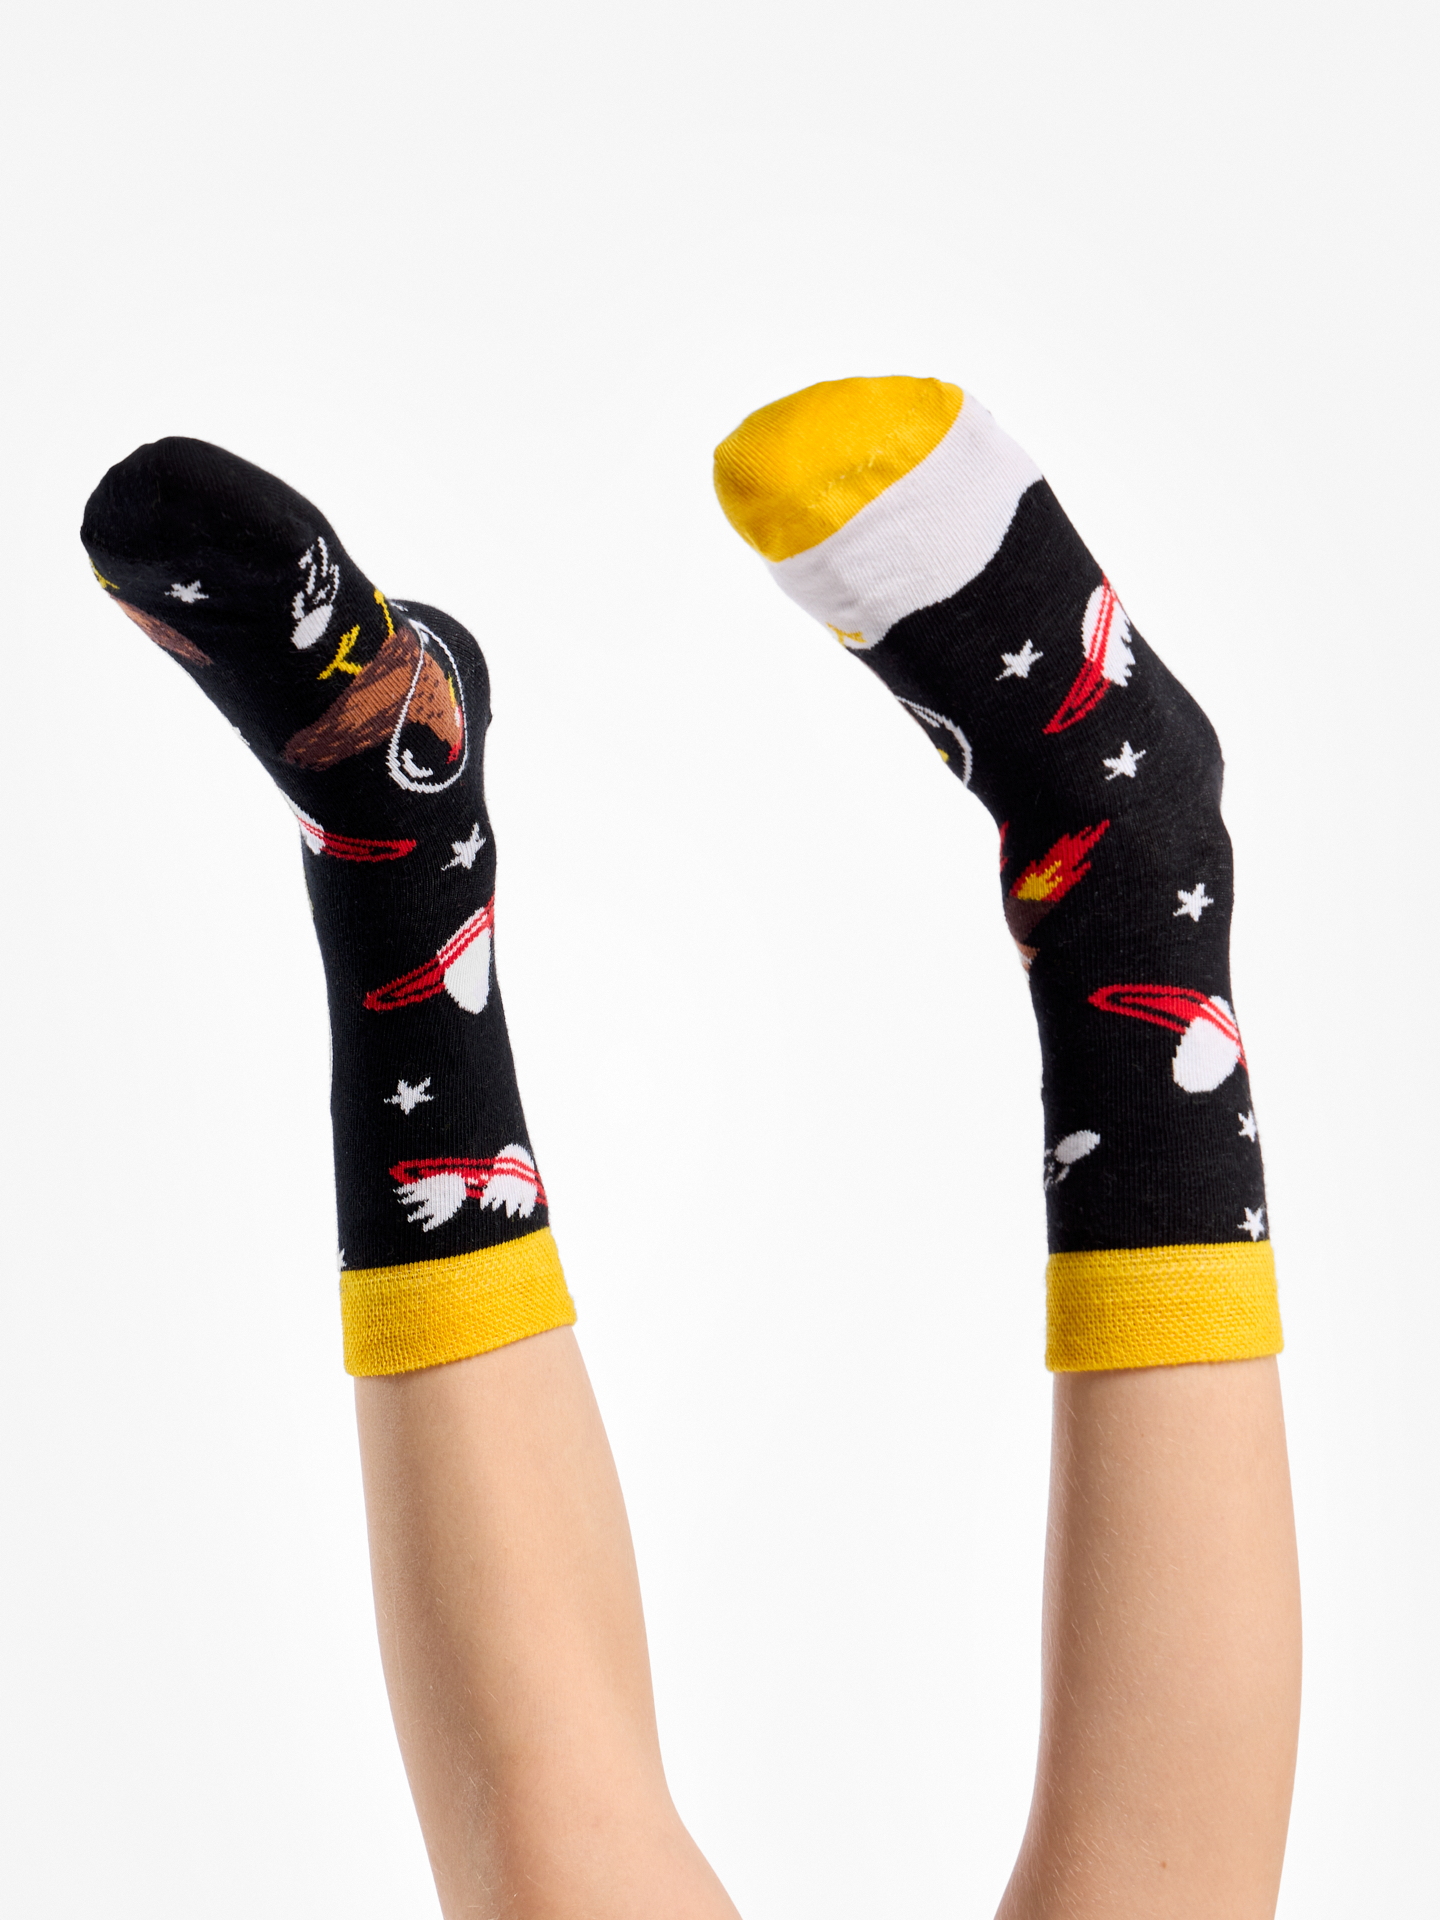 Kids' Socks Hen Astronaut